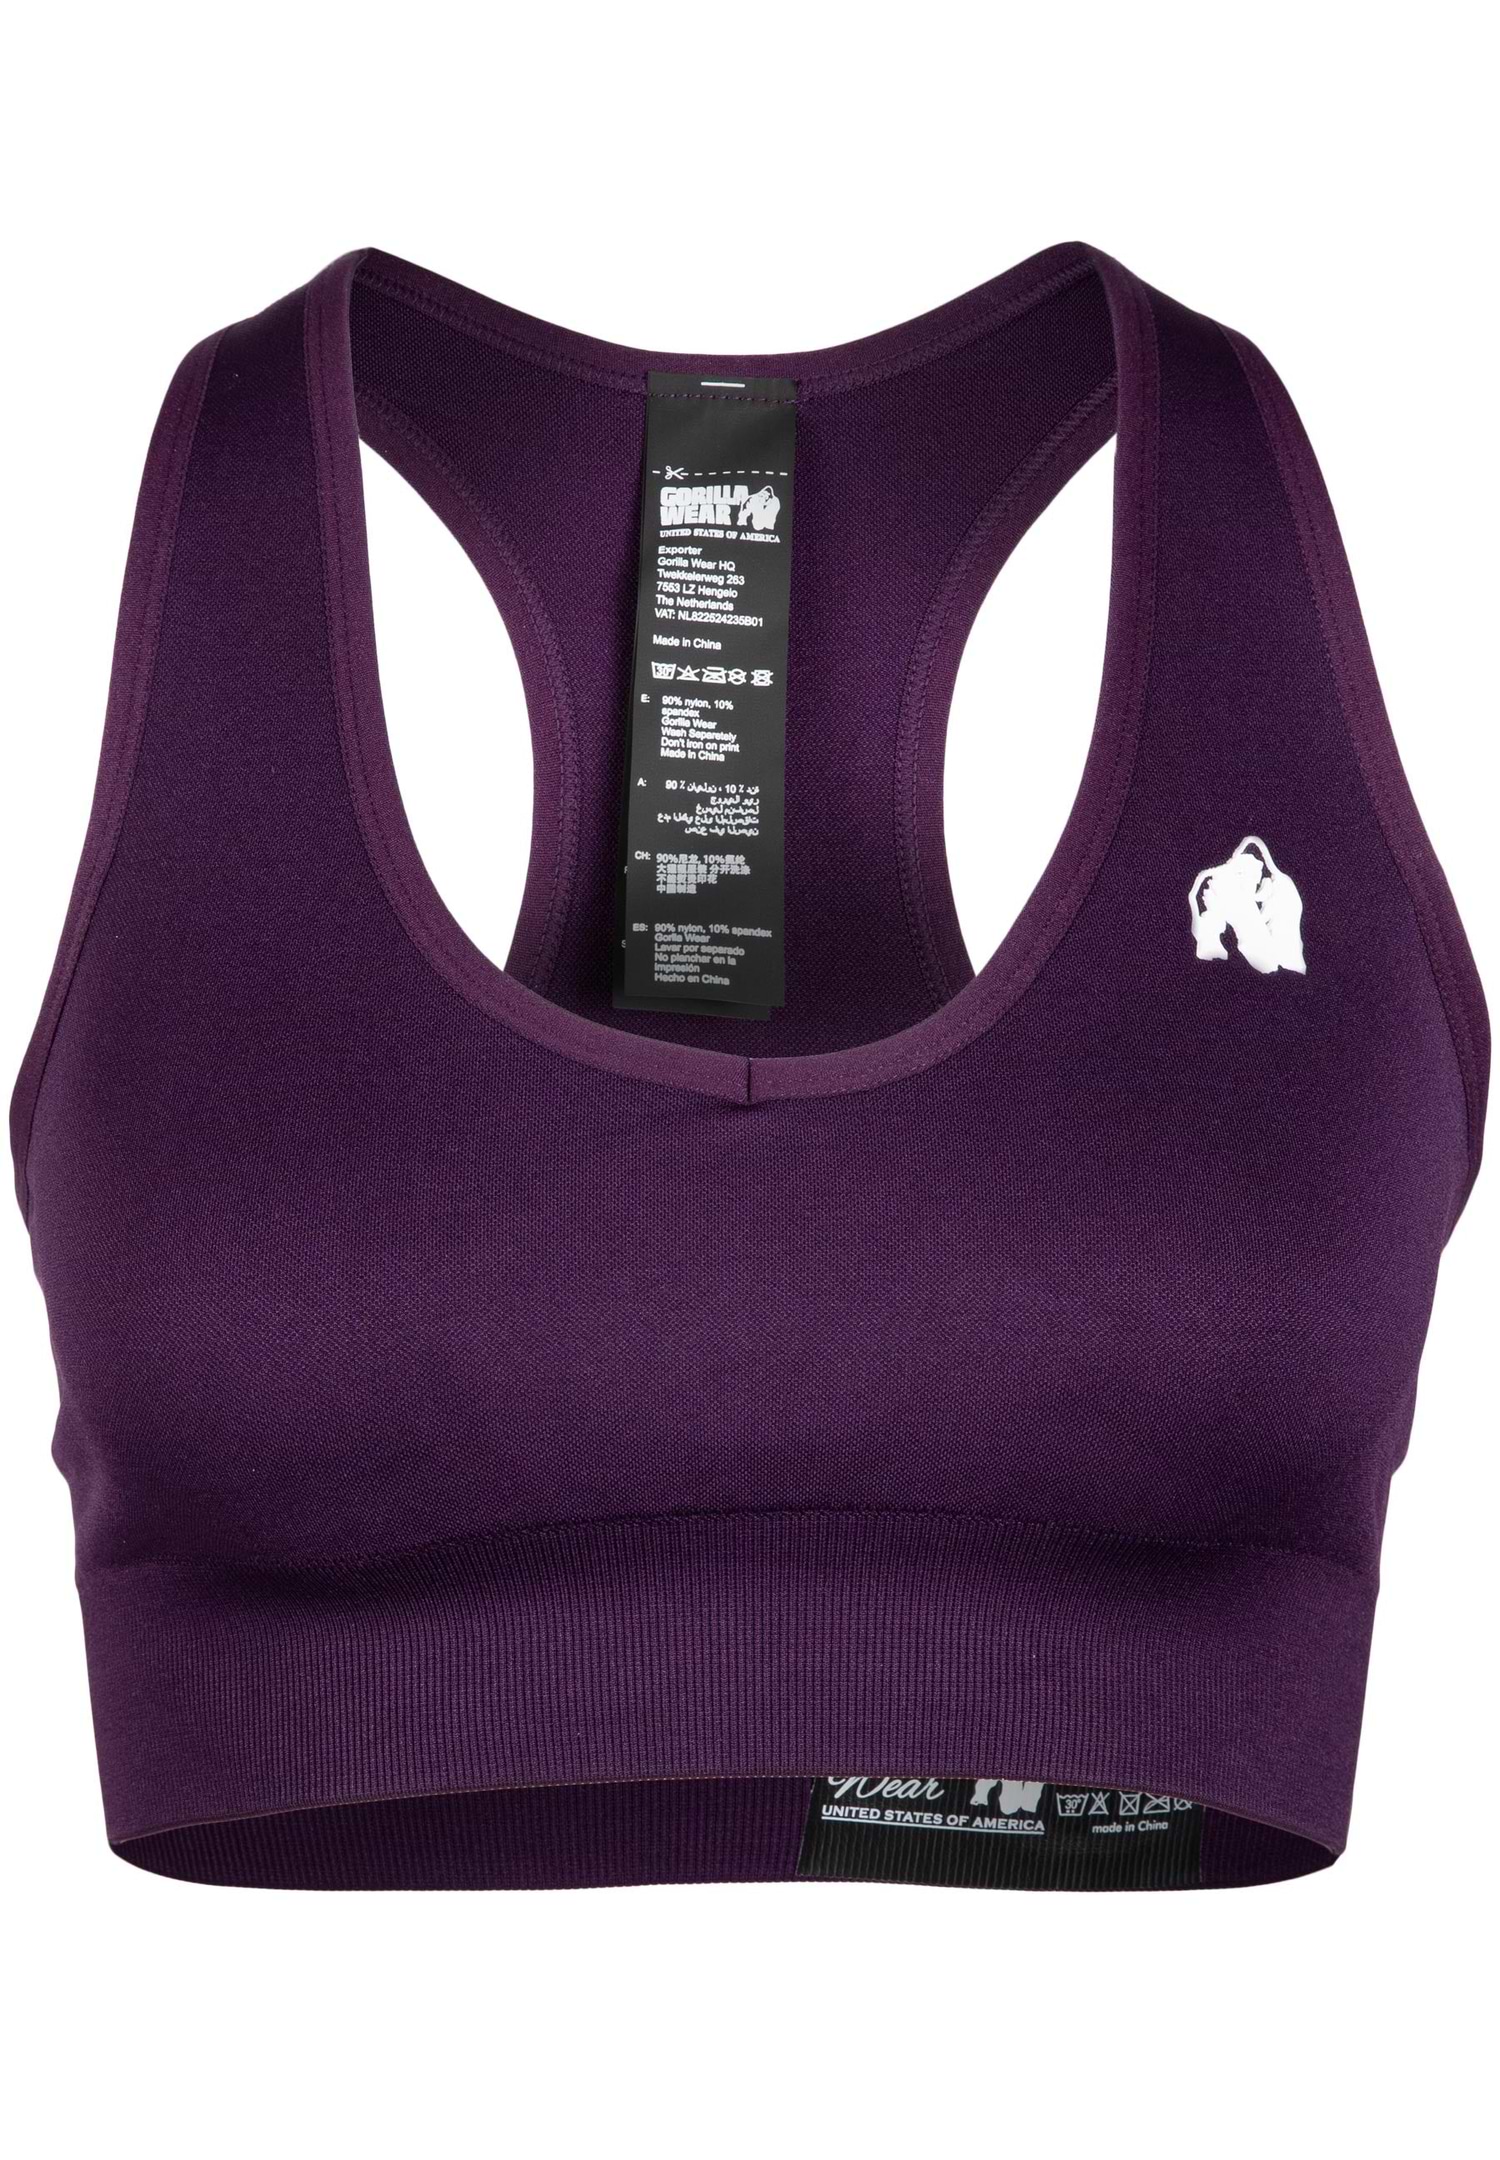 NIKE pro sport bra in deep purple/black straps/pink band women's size small